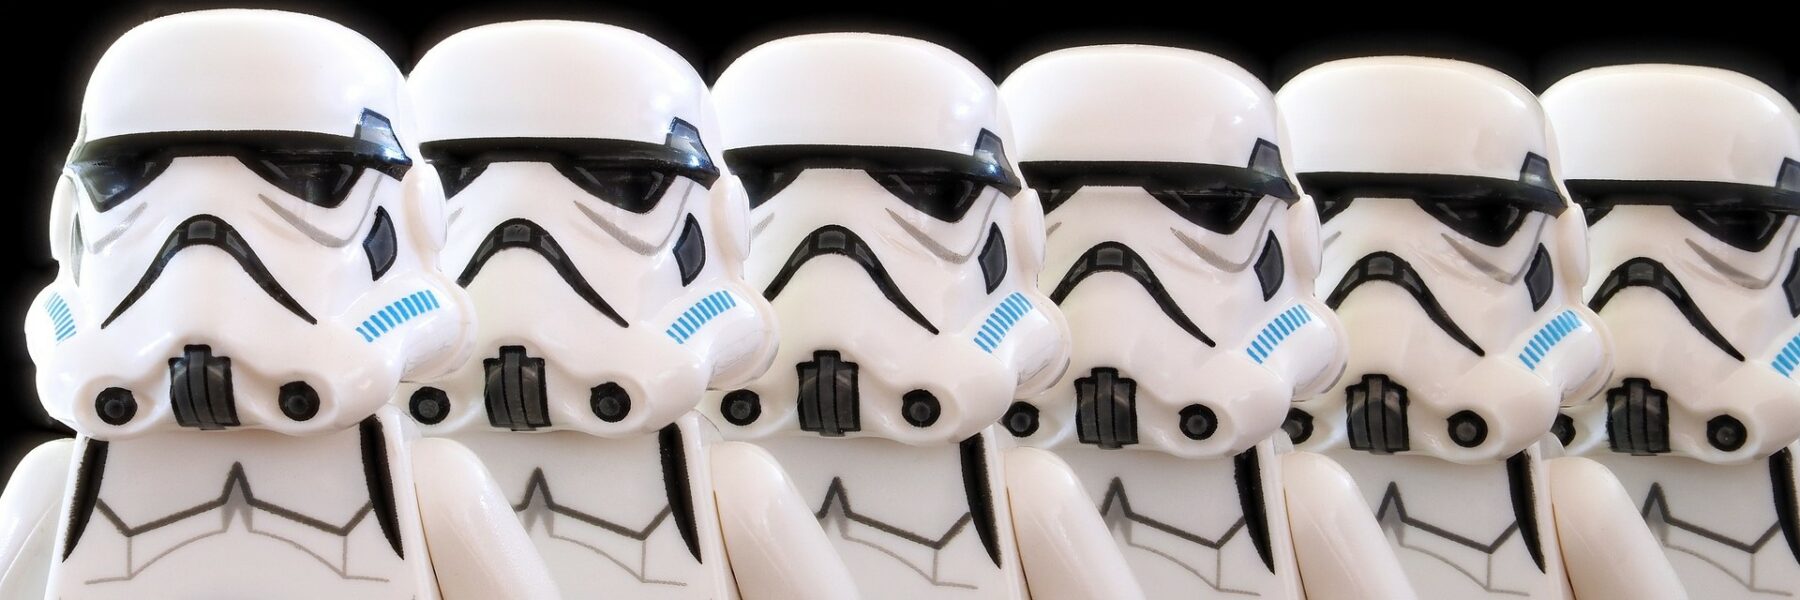 Star Wars Clones